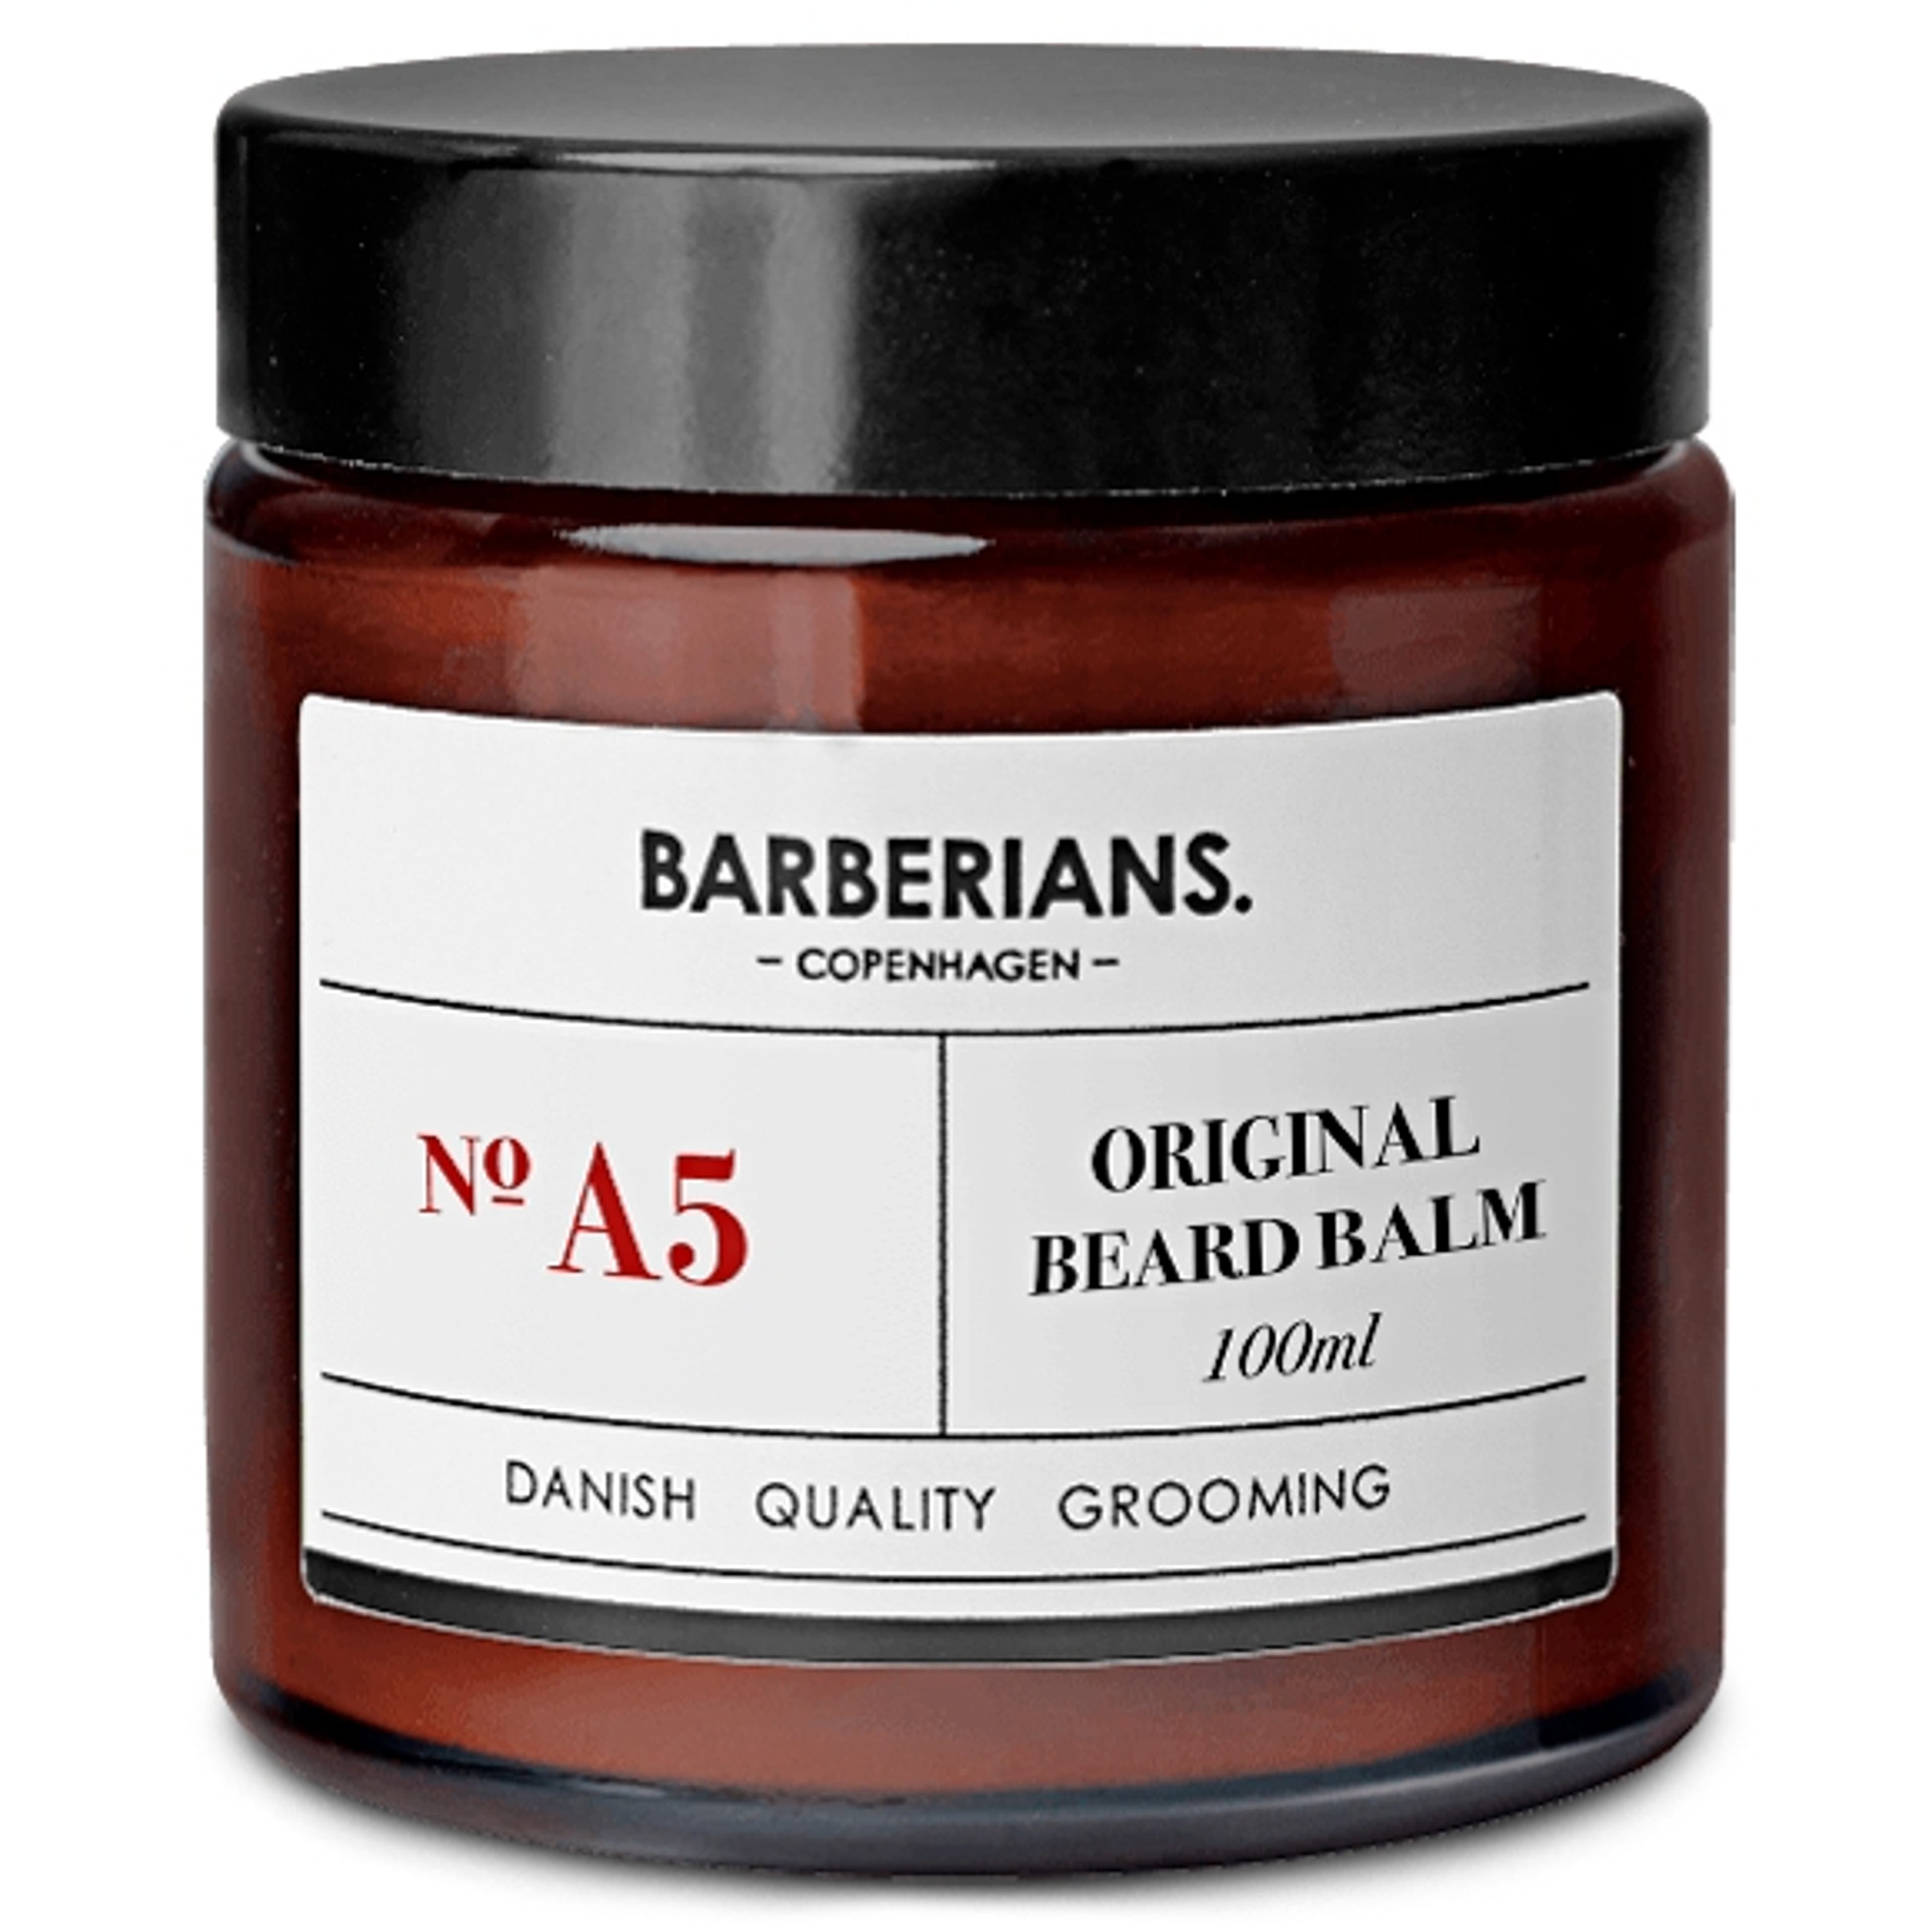 Barberians - Original Beard Balm